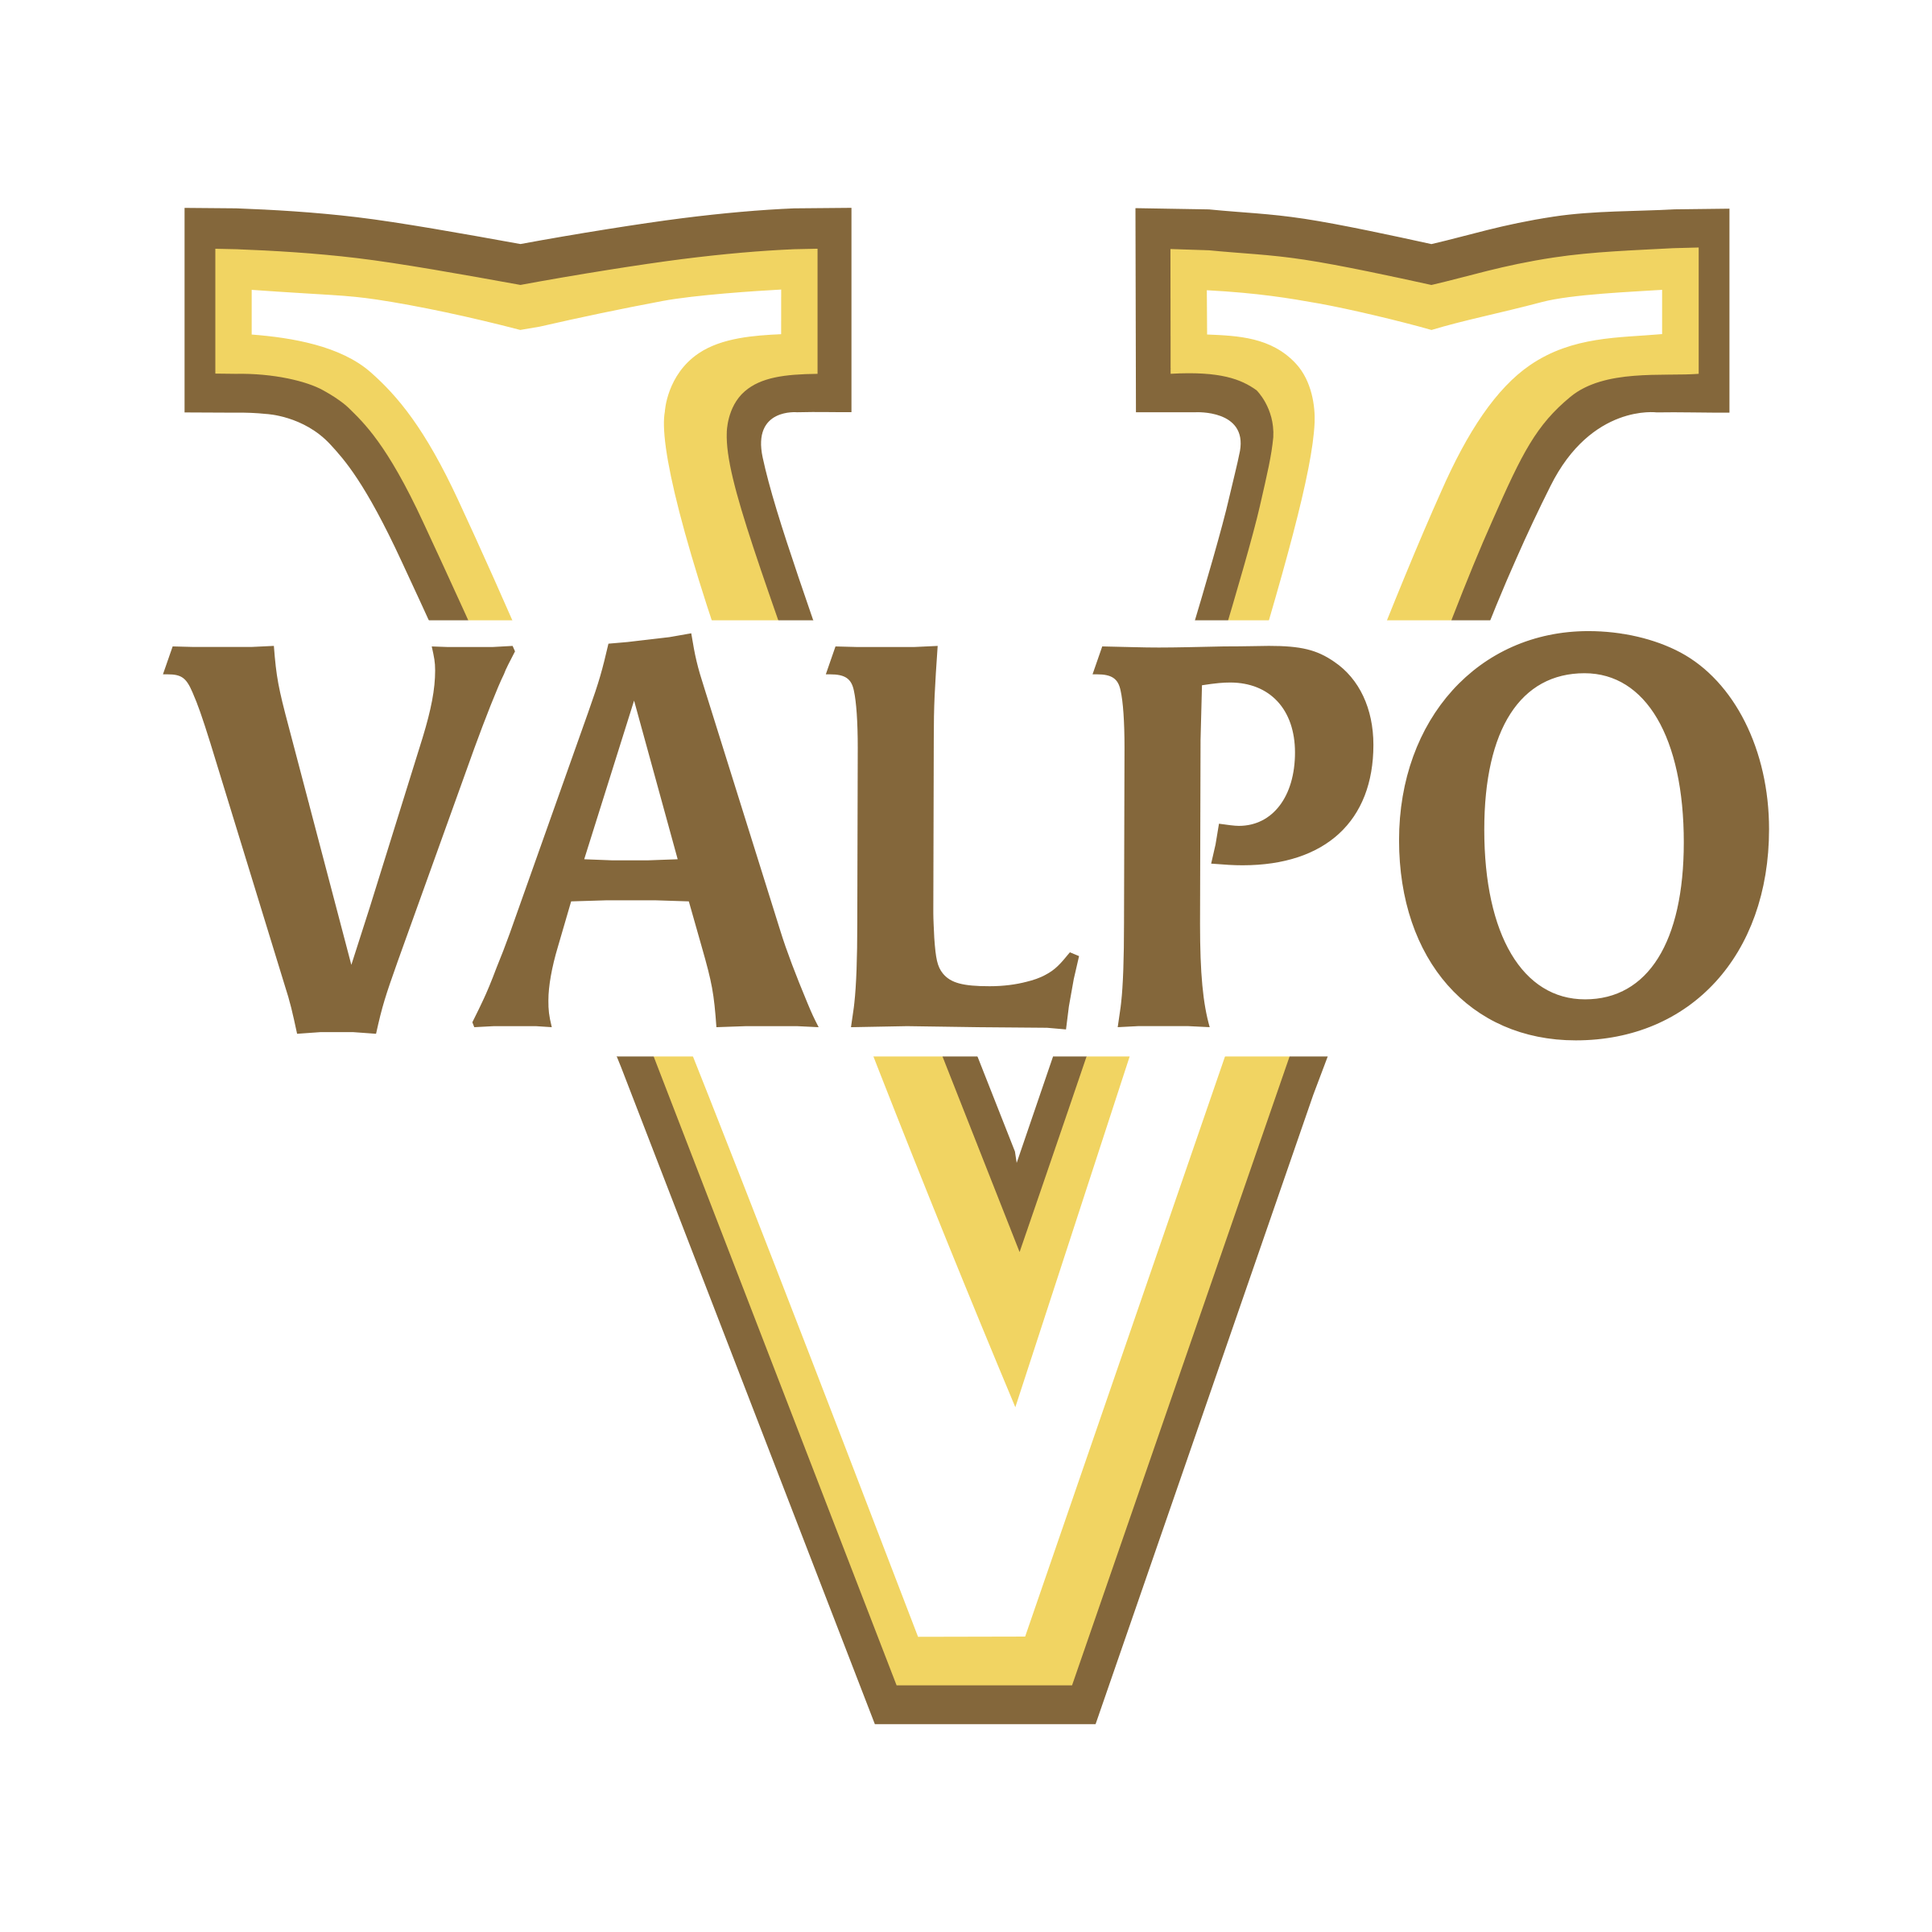 Valparaiso Logo - Valparaiso Crusaders Logo PNG Transparent & SVG Vector - Freebie Supply